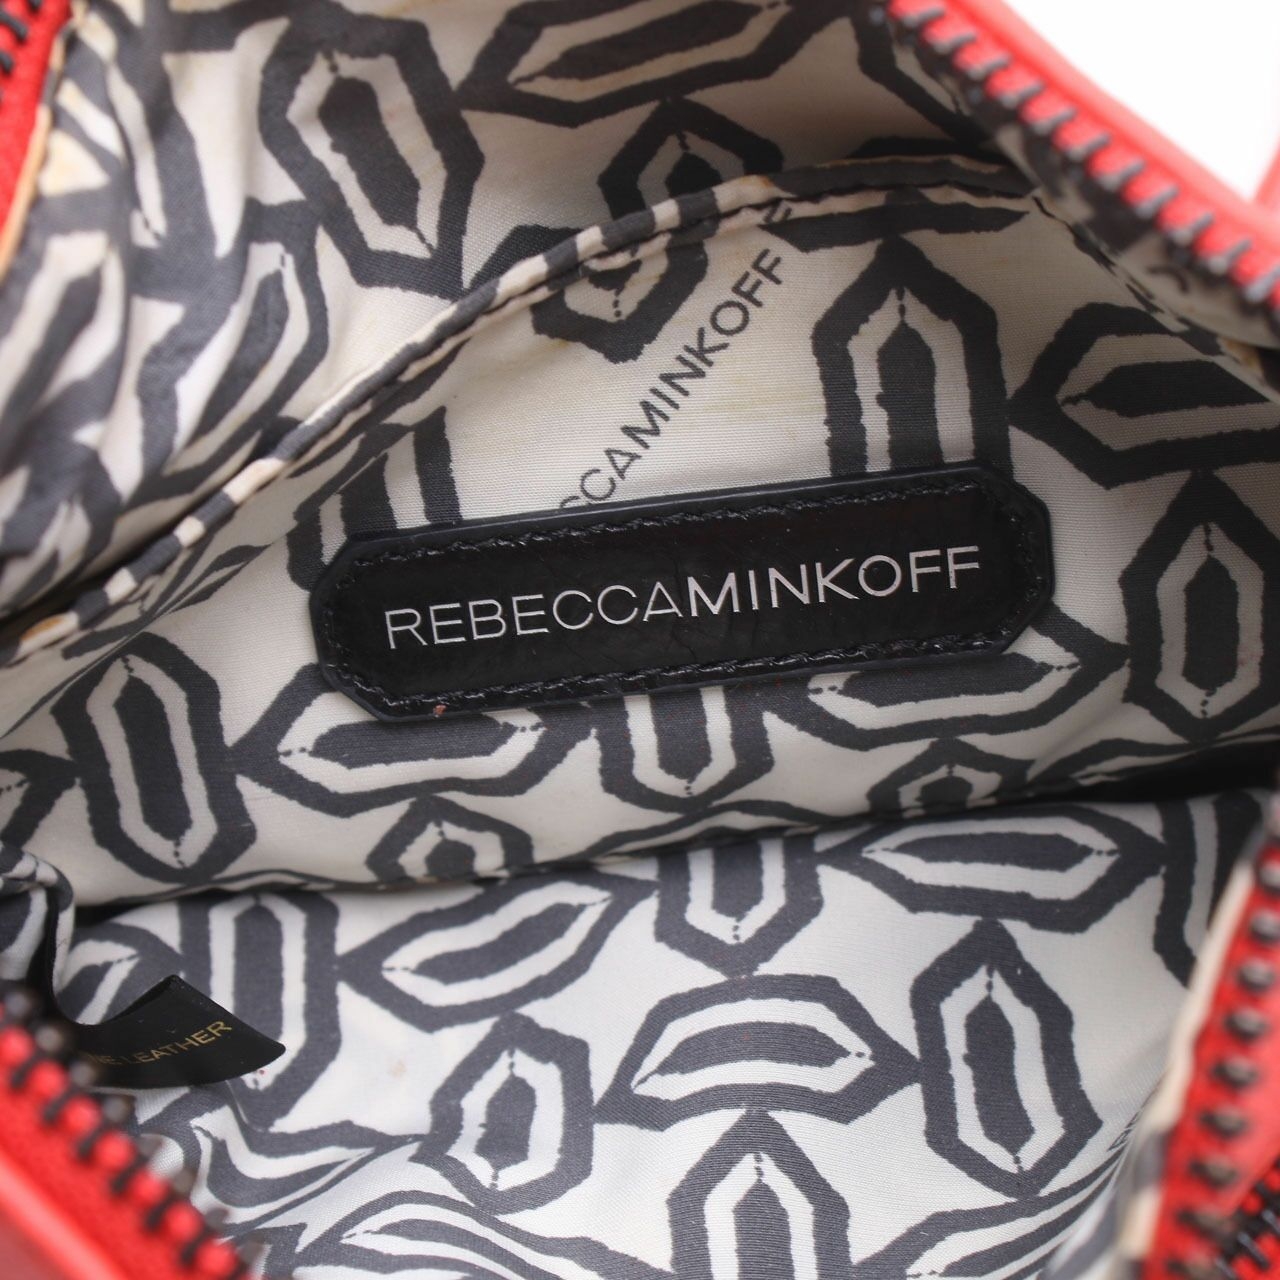 Rebbecca Minkoff Red Sling Bag